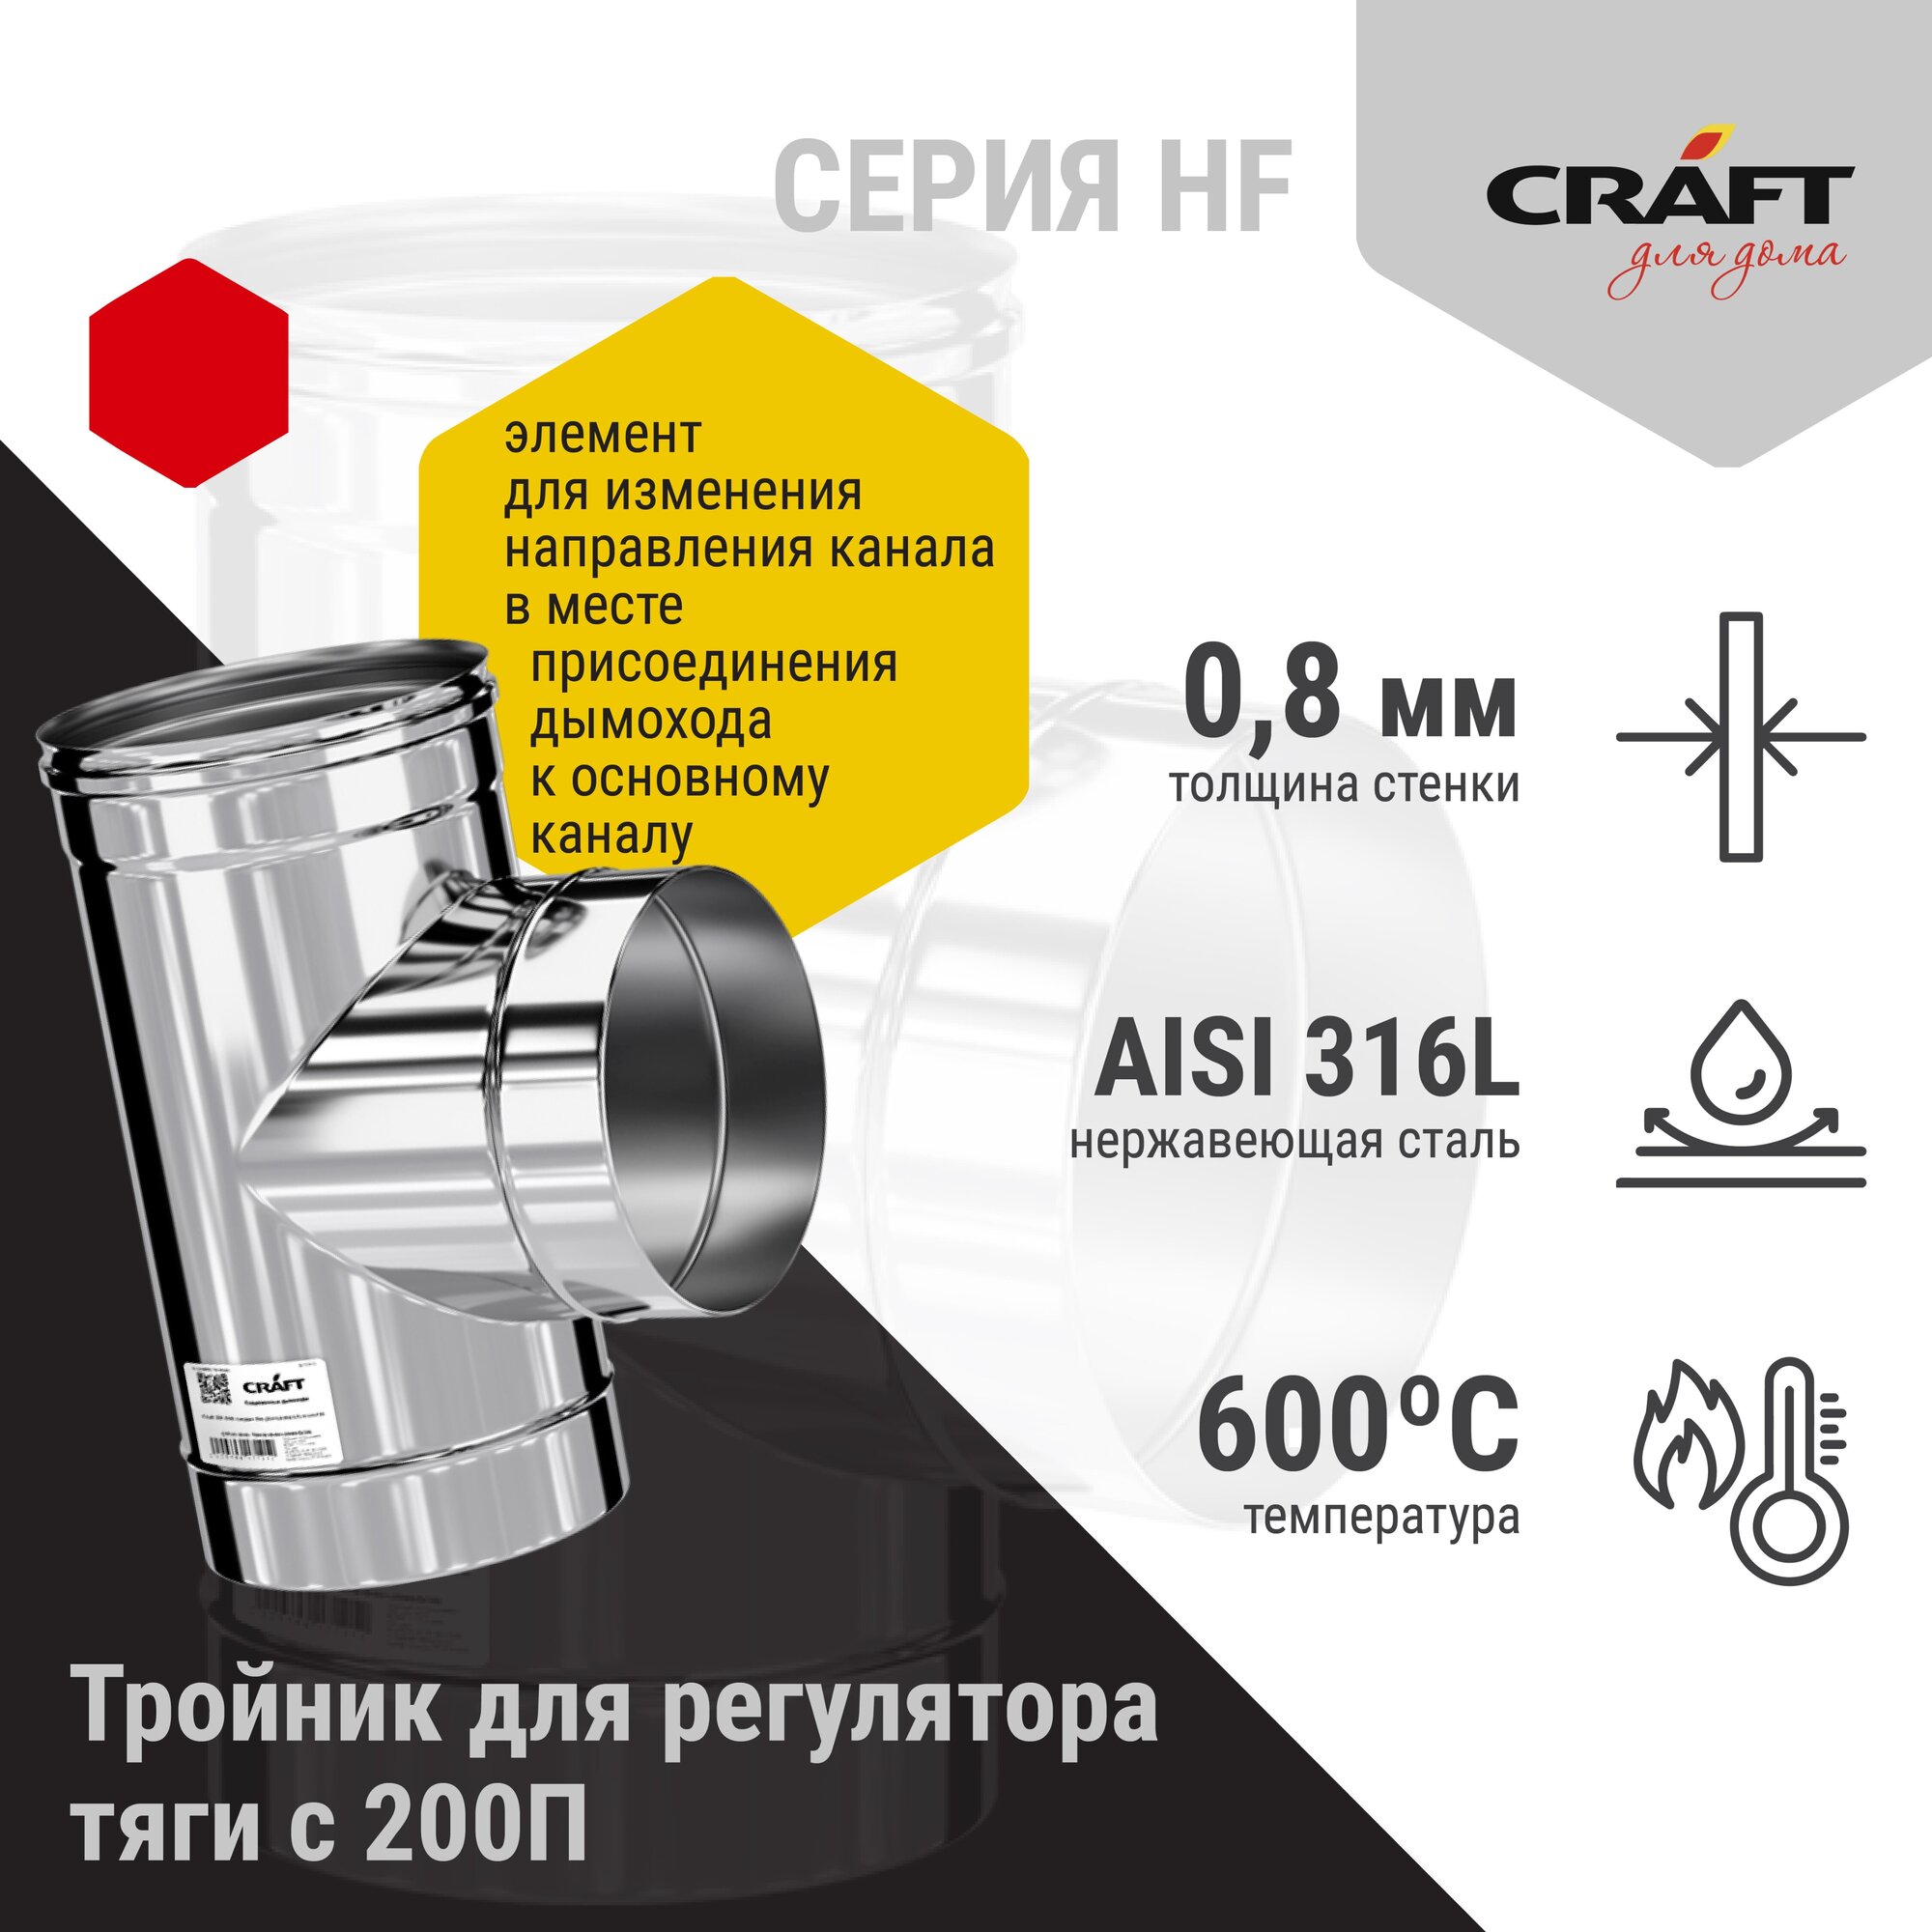 Craft HF тройник для регулятора тяги (316/0,8) Ф250нос200П - фотография № 2